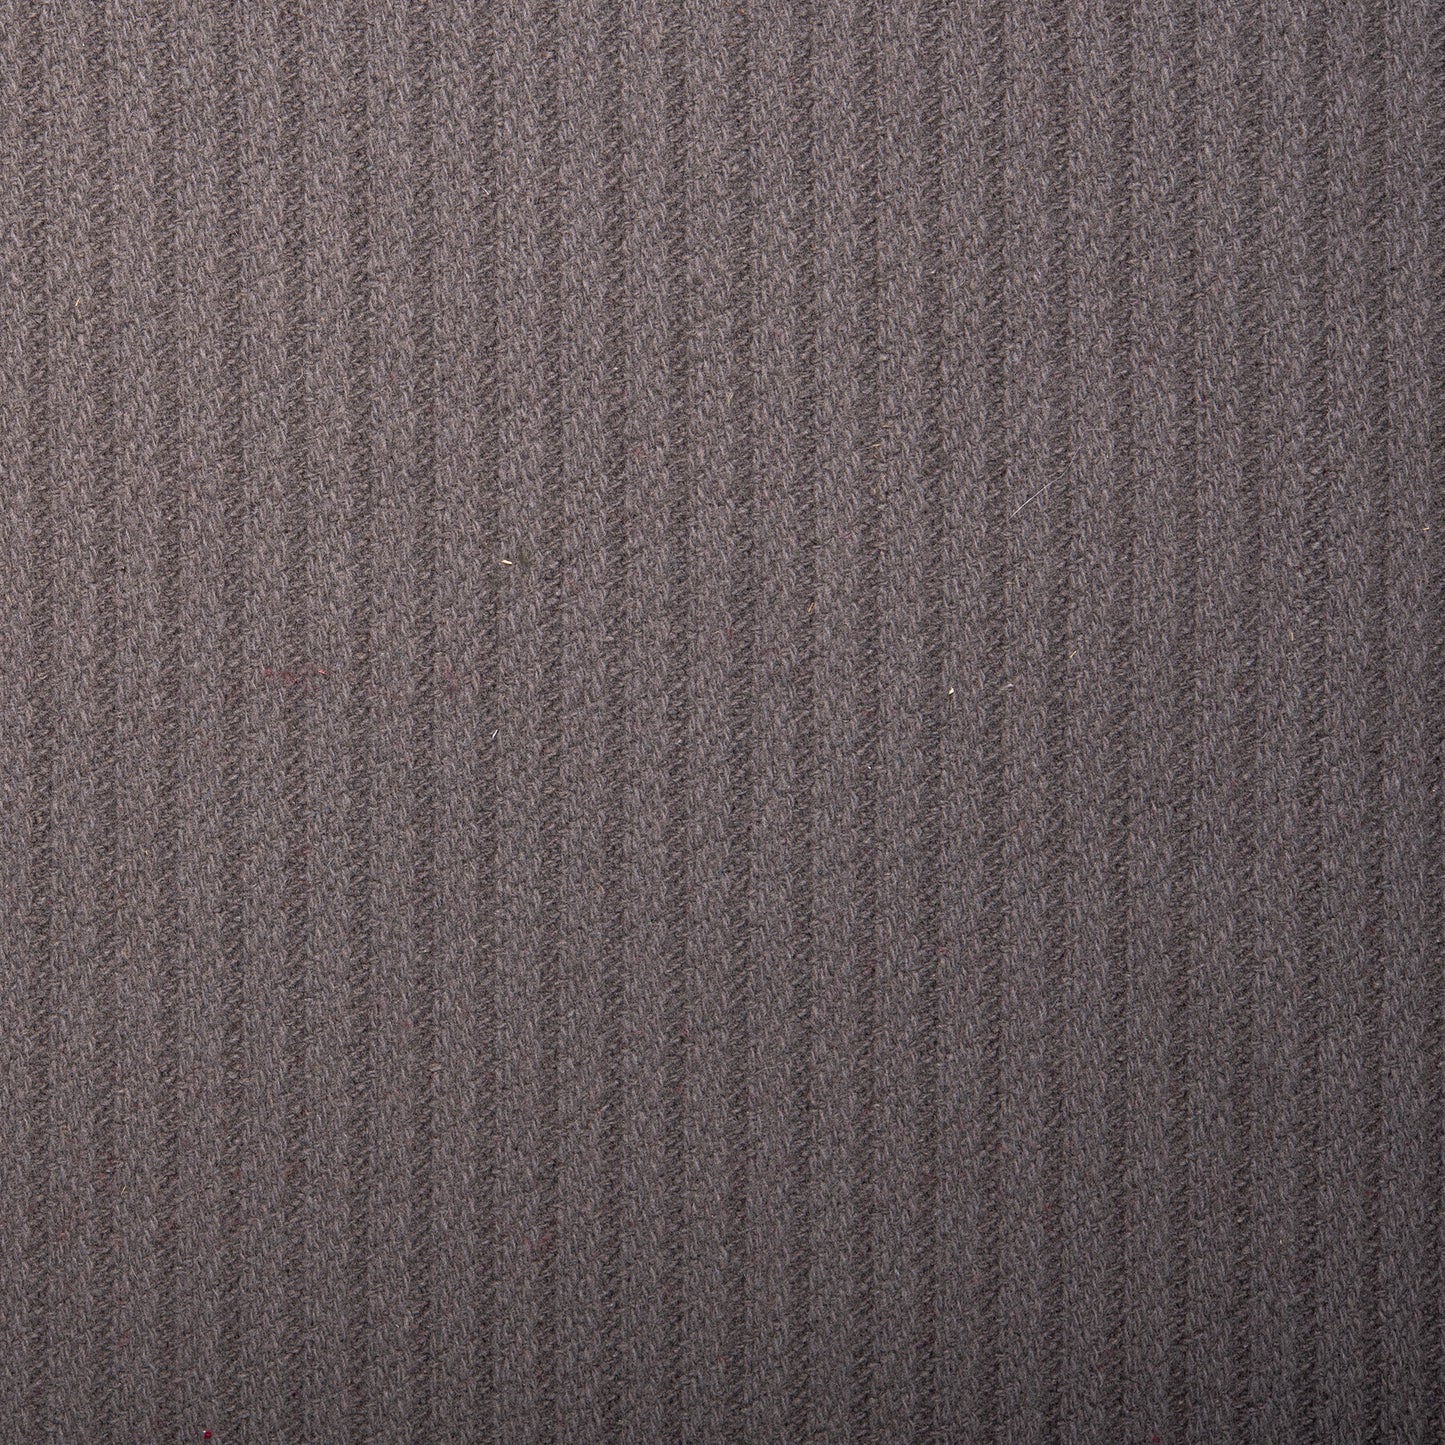 Textured wool - ITALIANO - Stripes - Gray